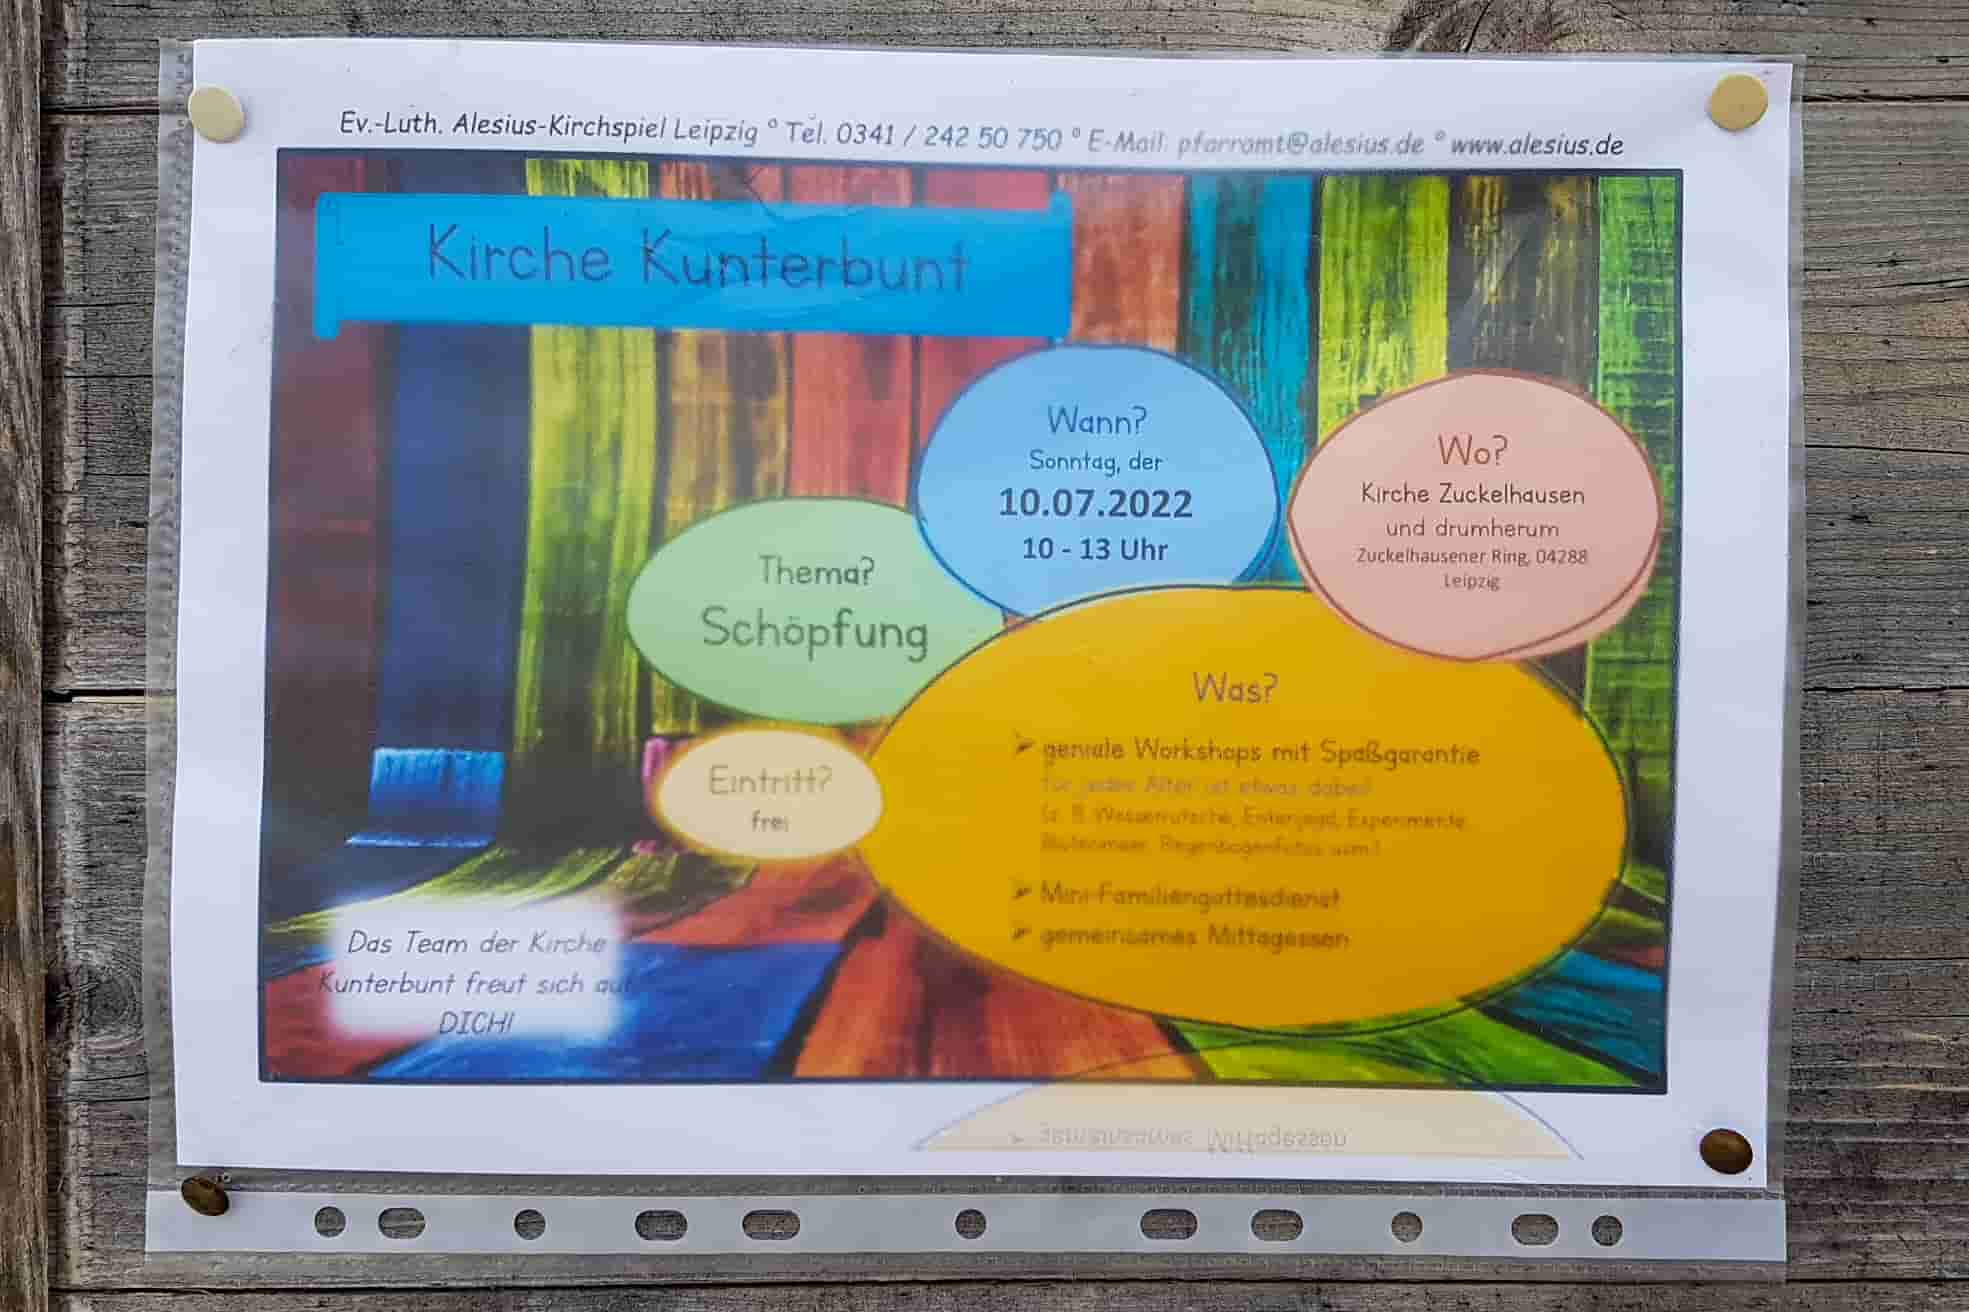 Holzhausen, Leipzig: Kirche kunterbunt